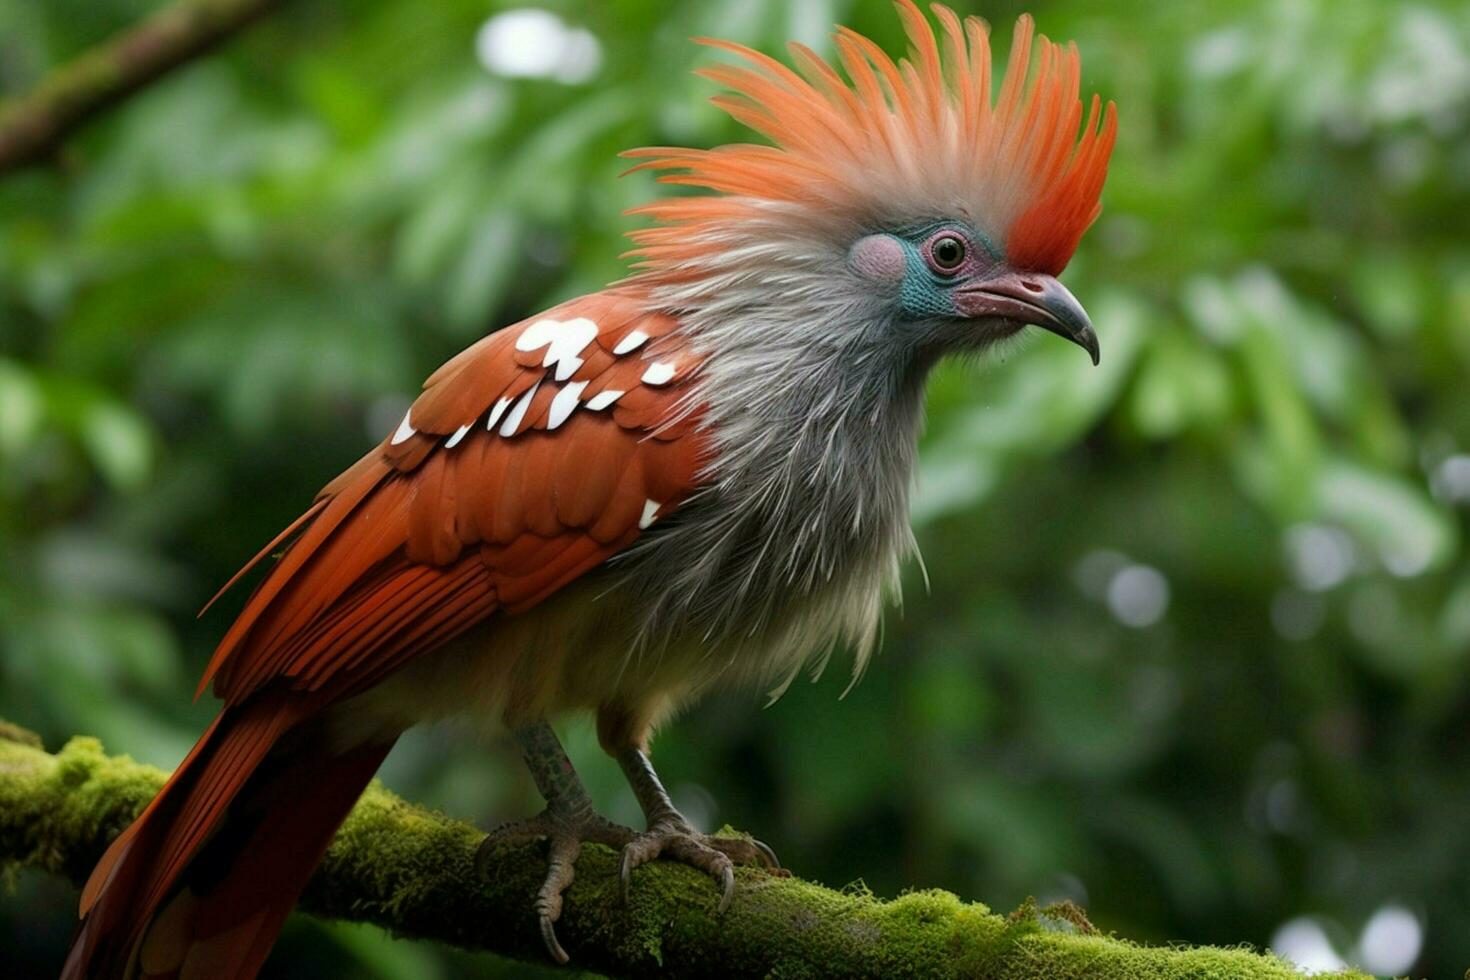 national bird of Liberia photo